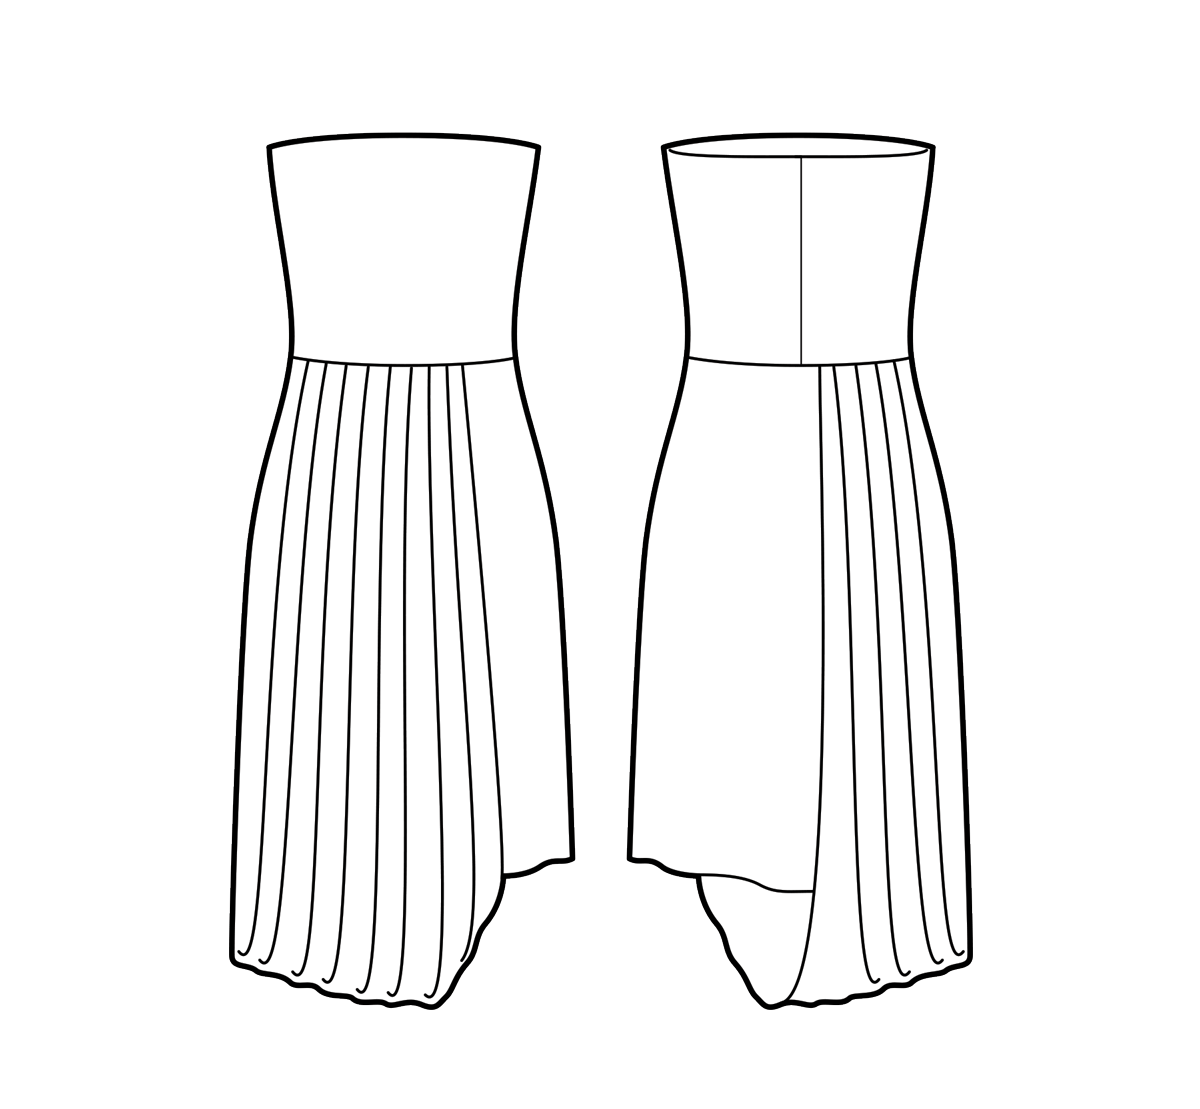 Strapless jersey dress with asymmetrical draped skirt